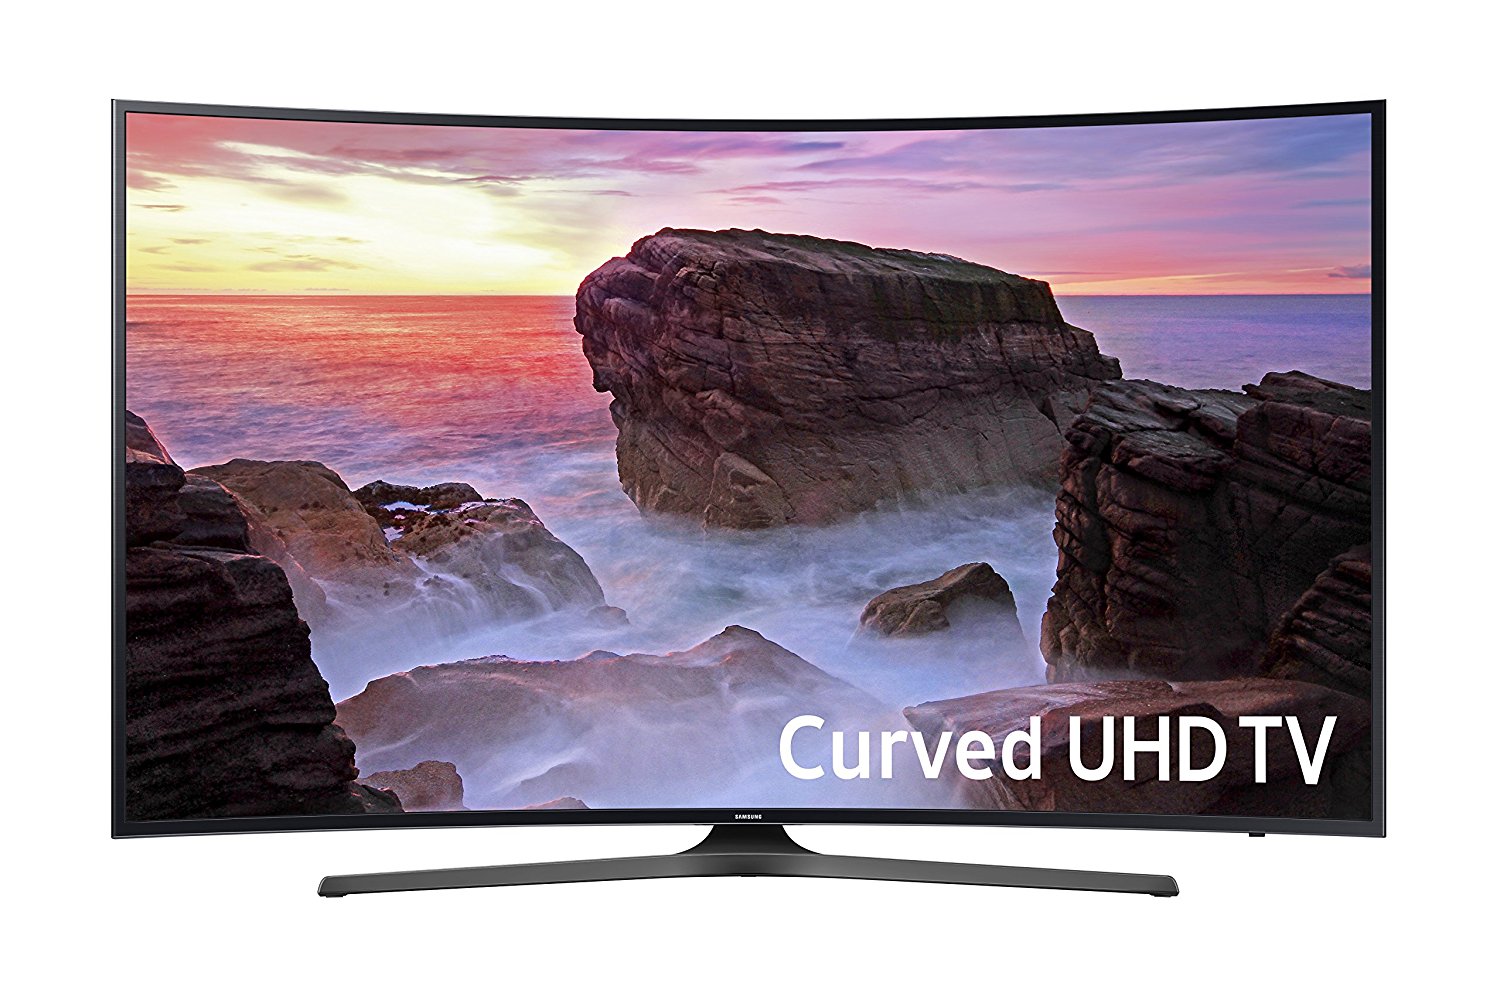 Samsung UN55MU6500 Curved 55-Inch 4K Ultra HD Smart LED TV